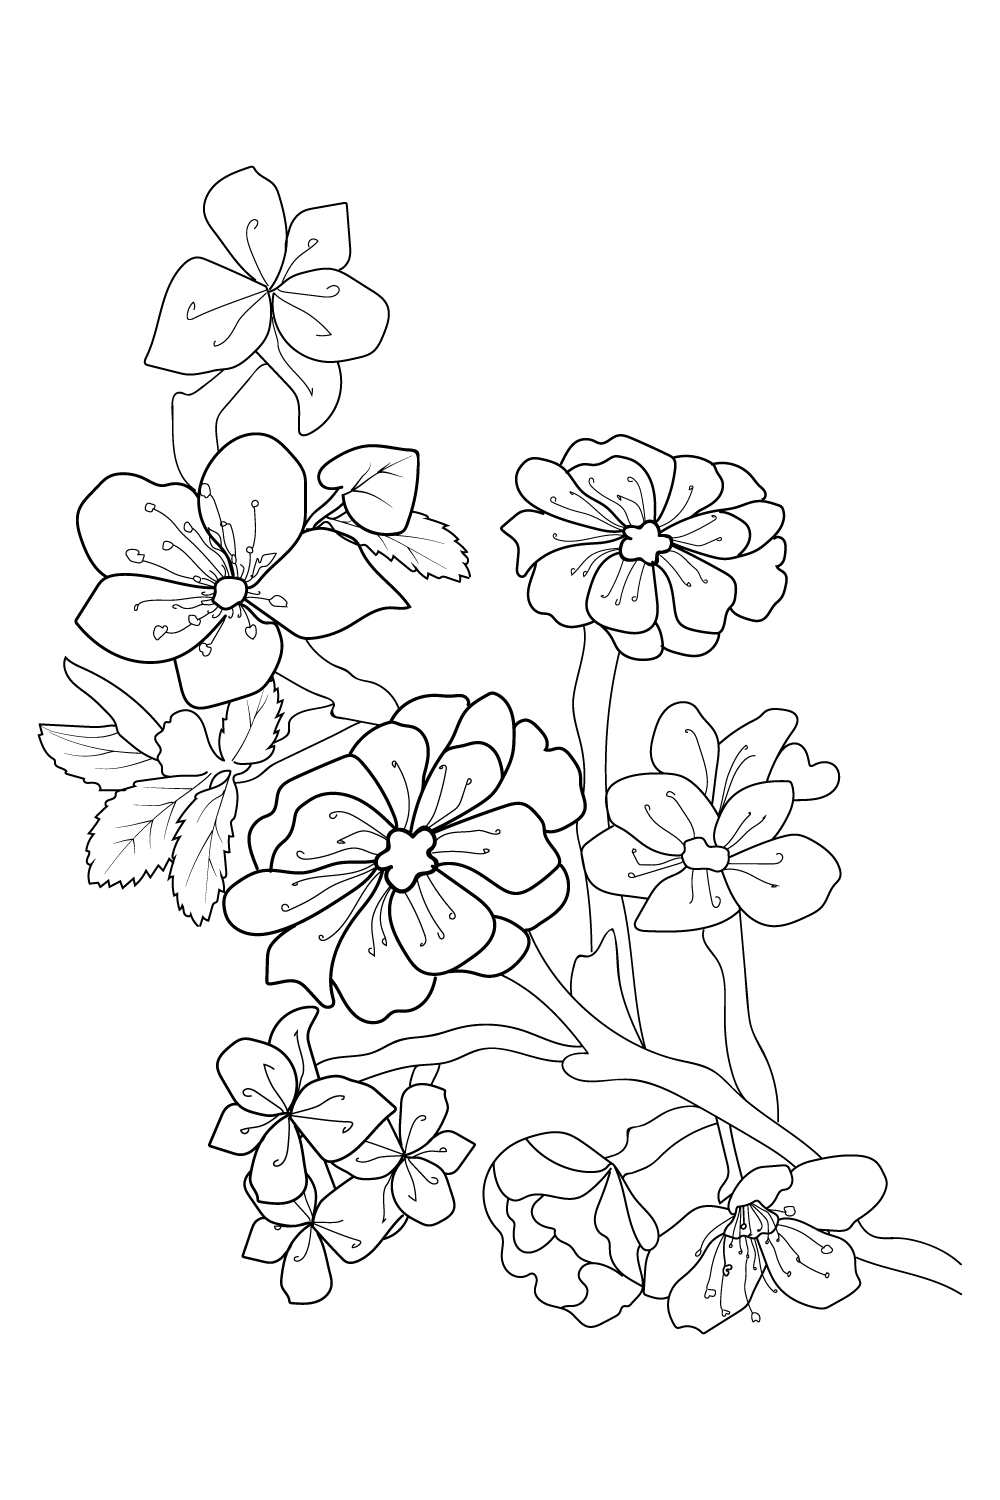 Cherry Blossom Tree Graphite Pencil Drawing Pencil drawing by Shweta  Mahajan  Artfinder